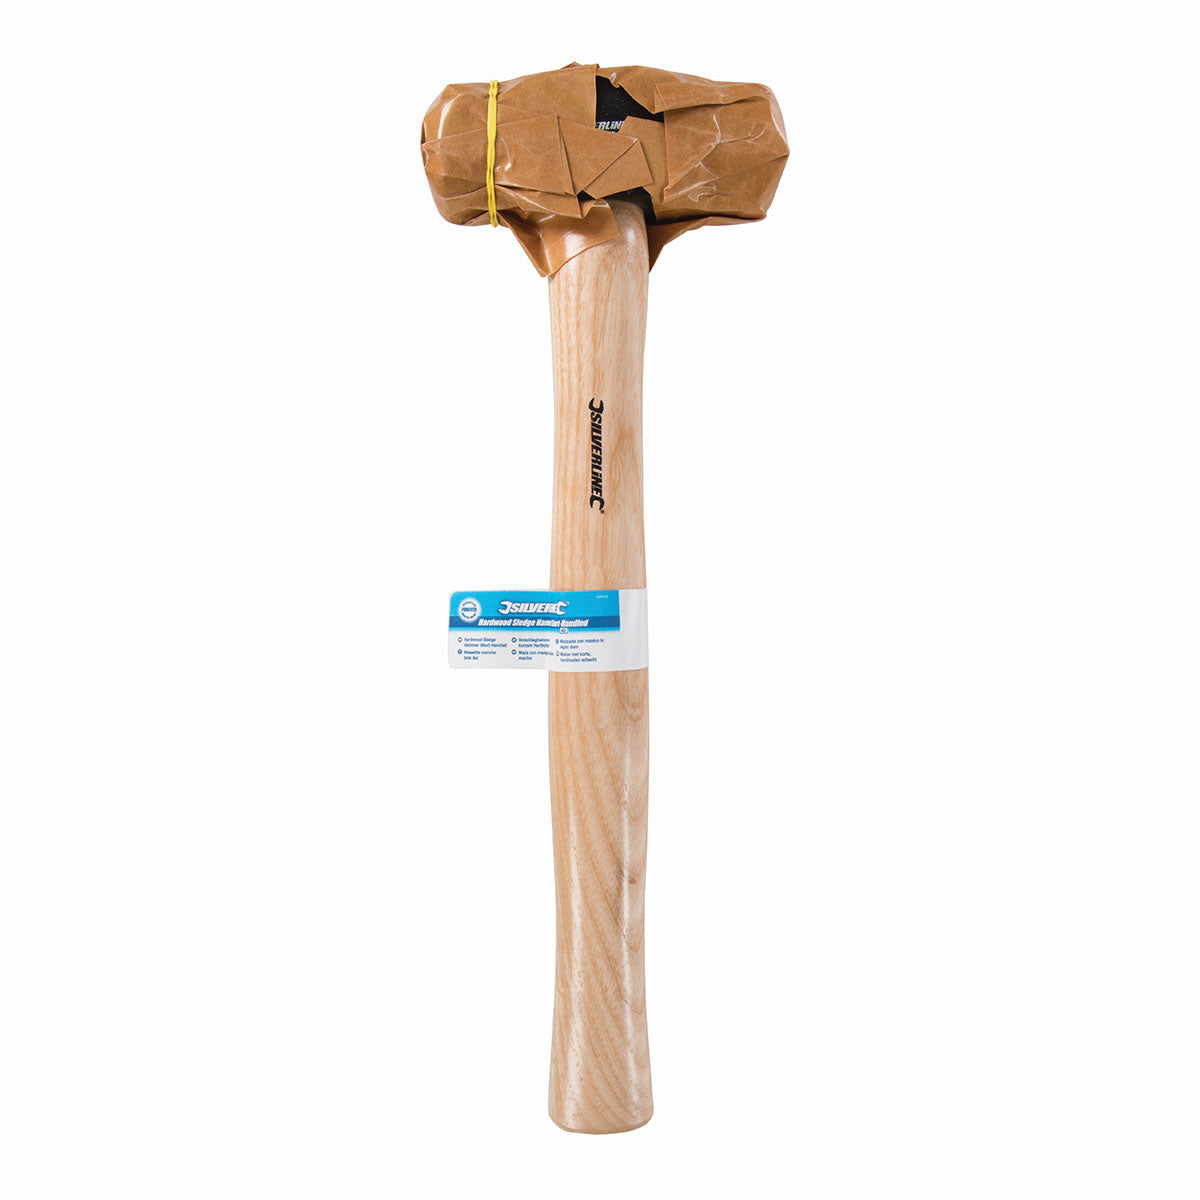 Silverline Sledge Hammer Ash Short-Handled 4lb (1.81kg)_3